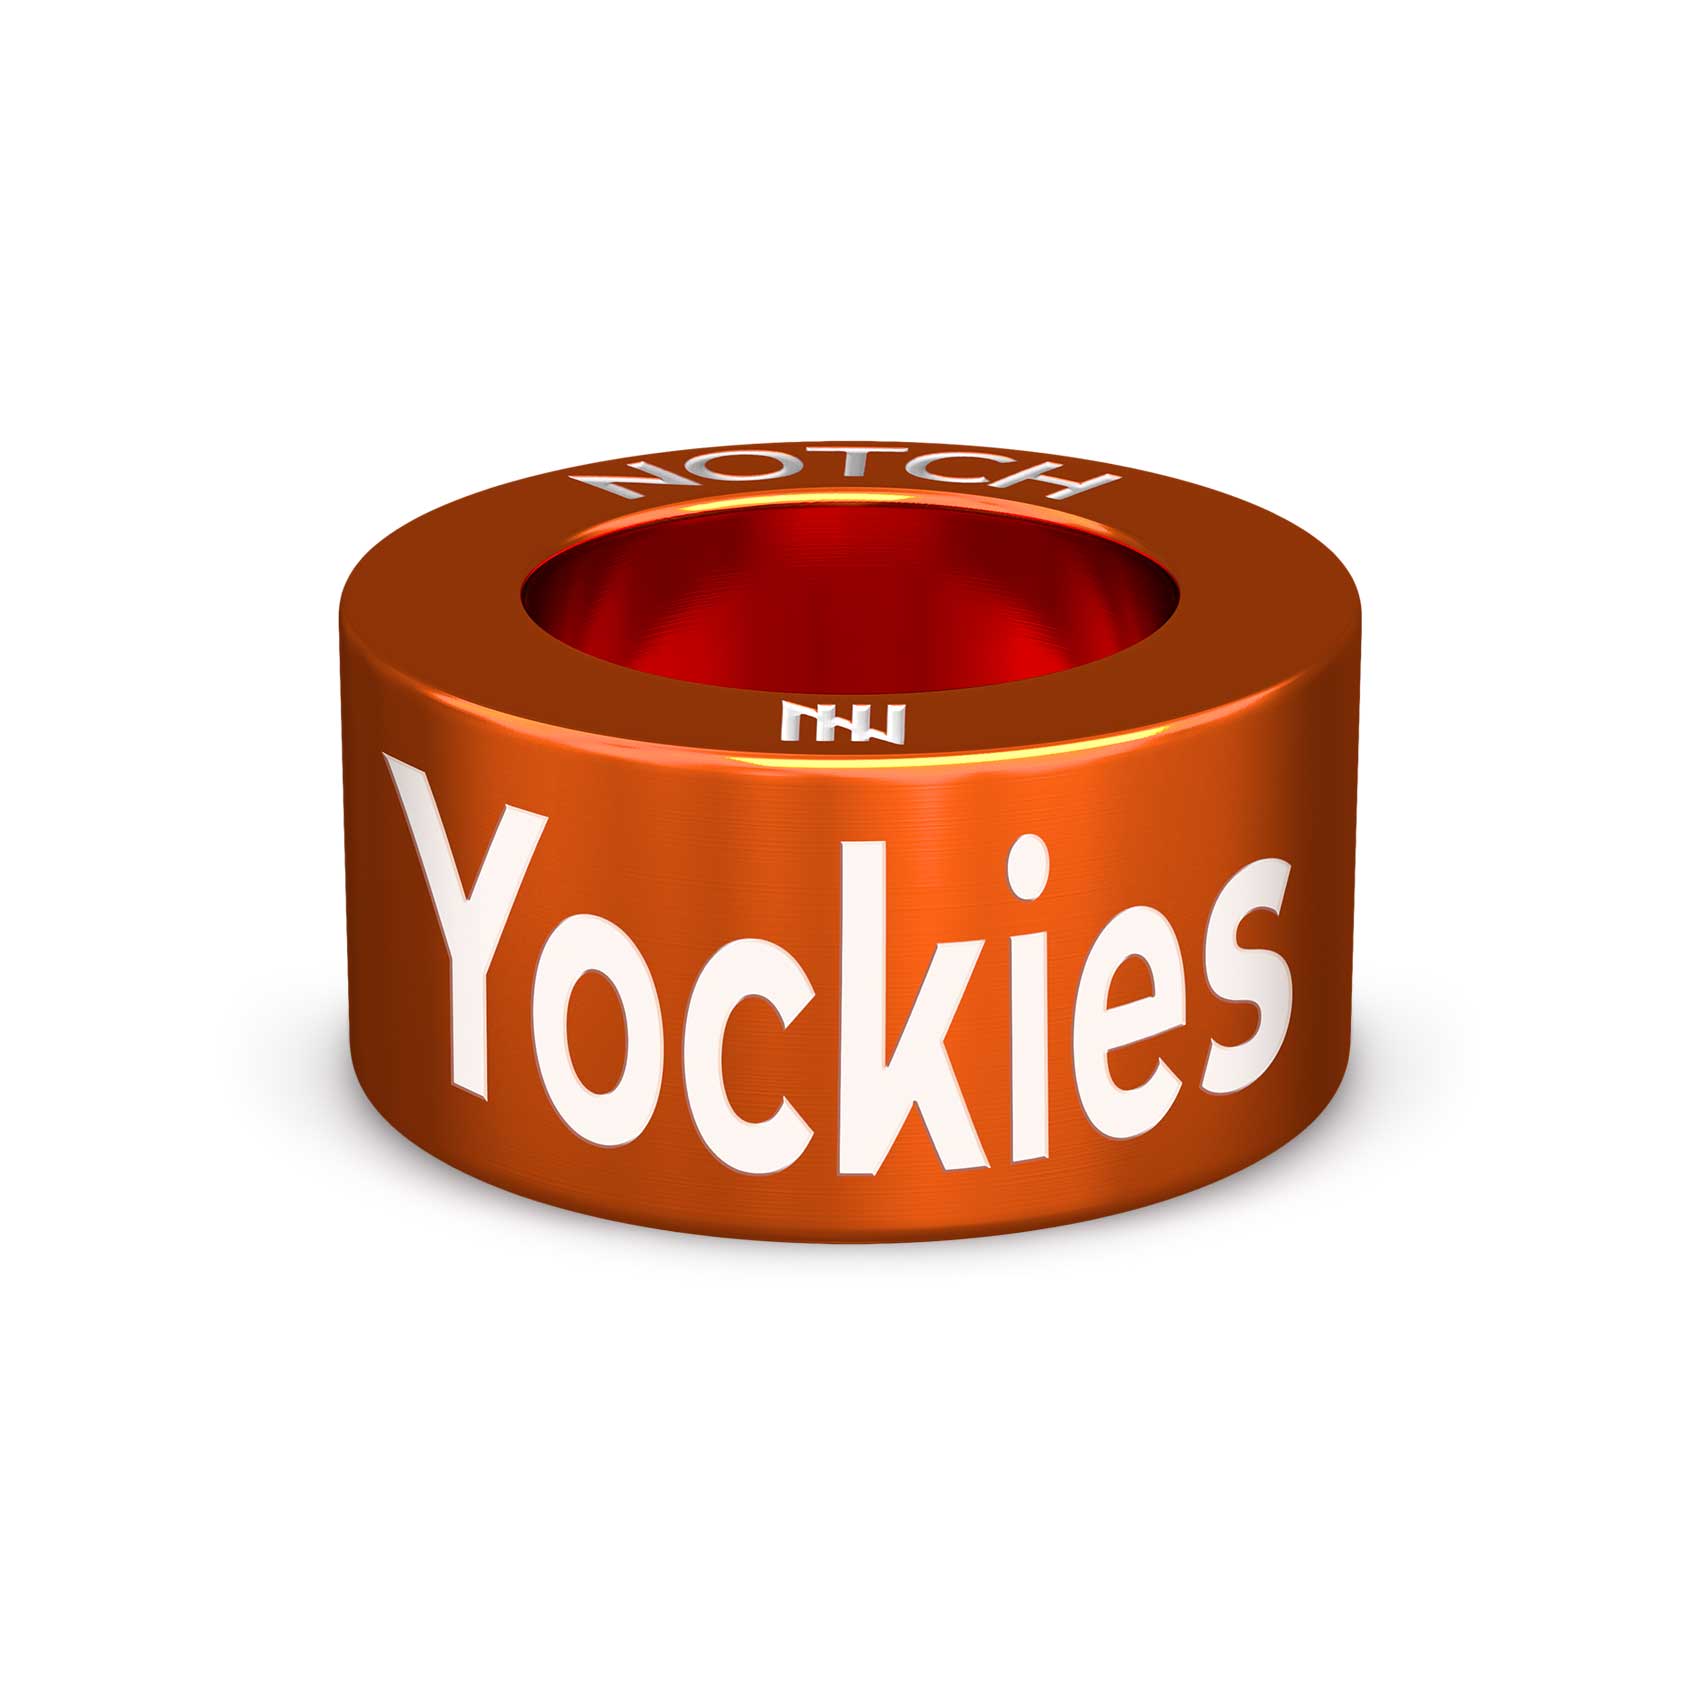 Yockies by Cobbs